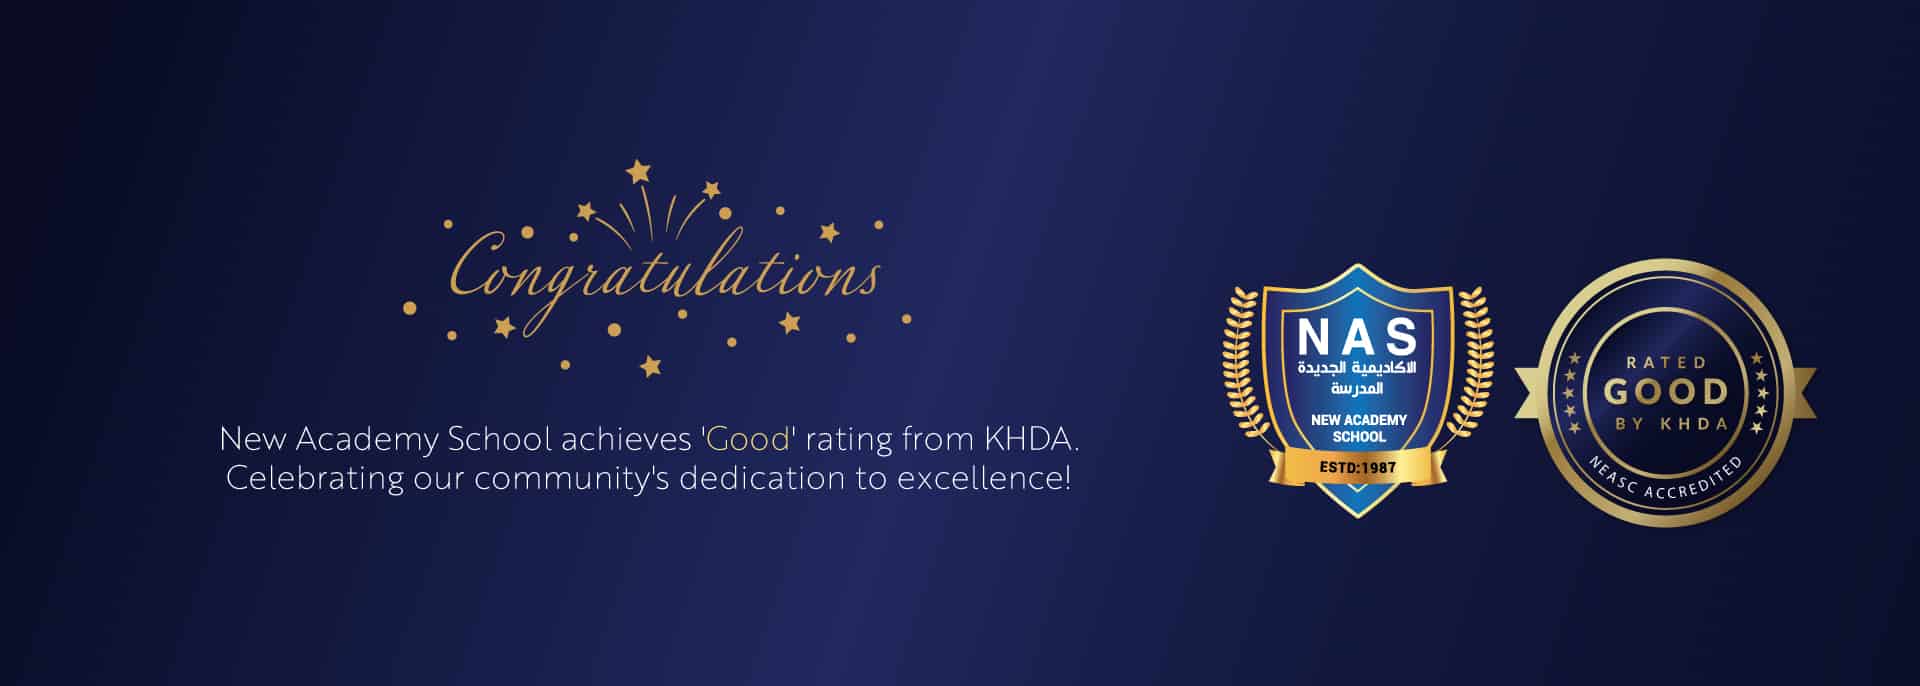 KHDA Rated "Good" American School in Dubai